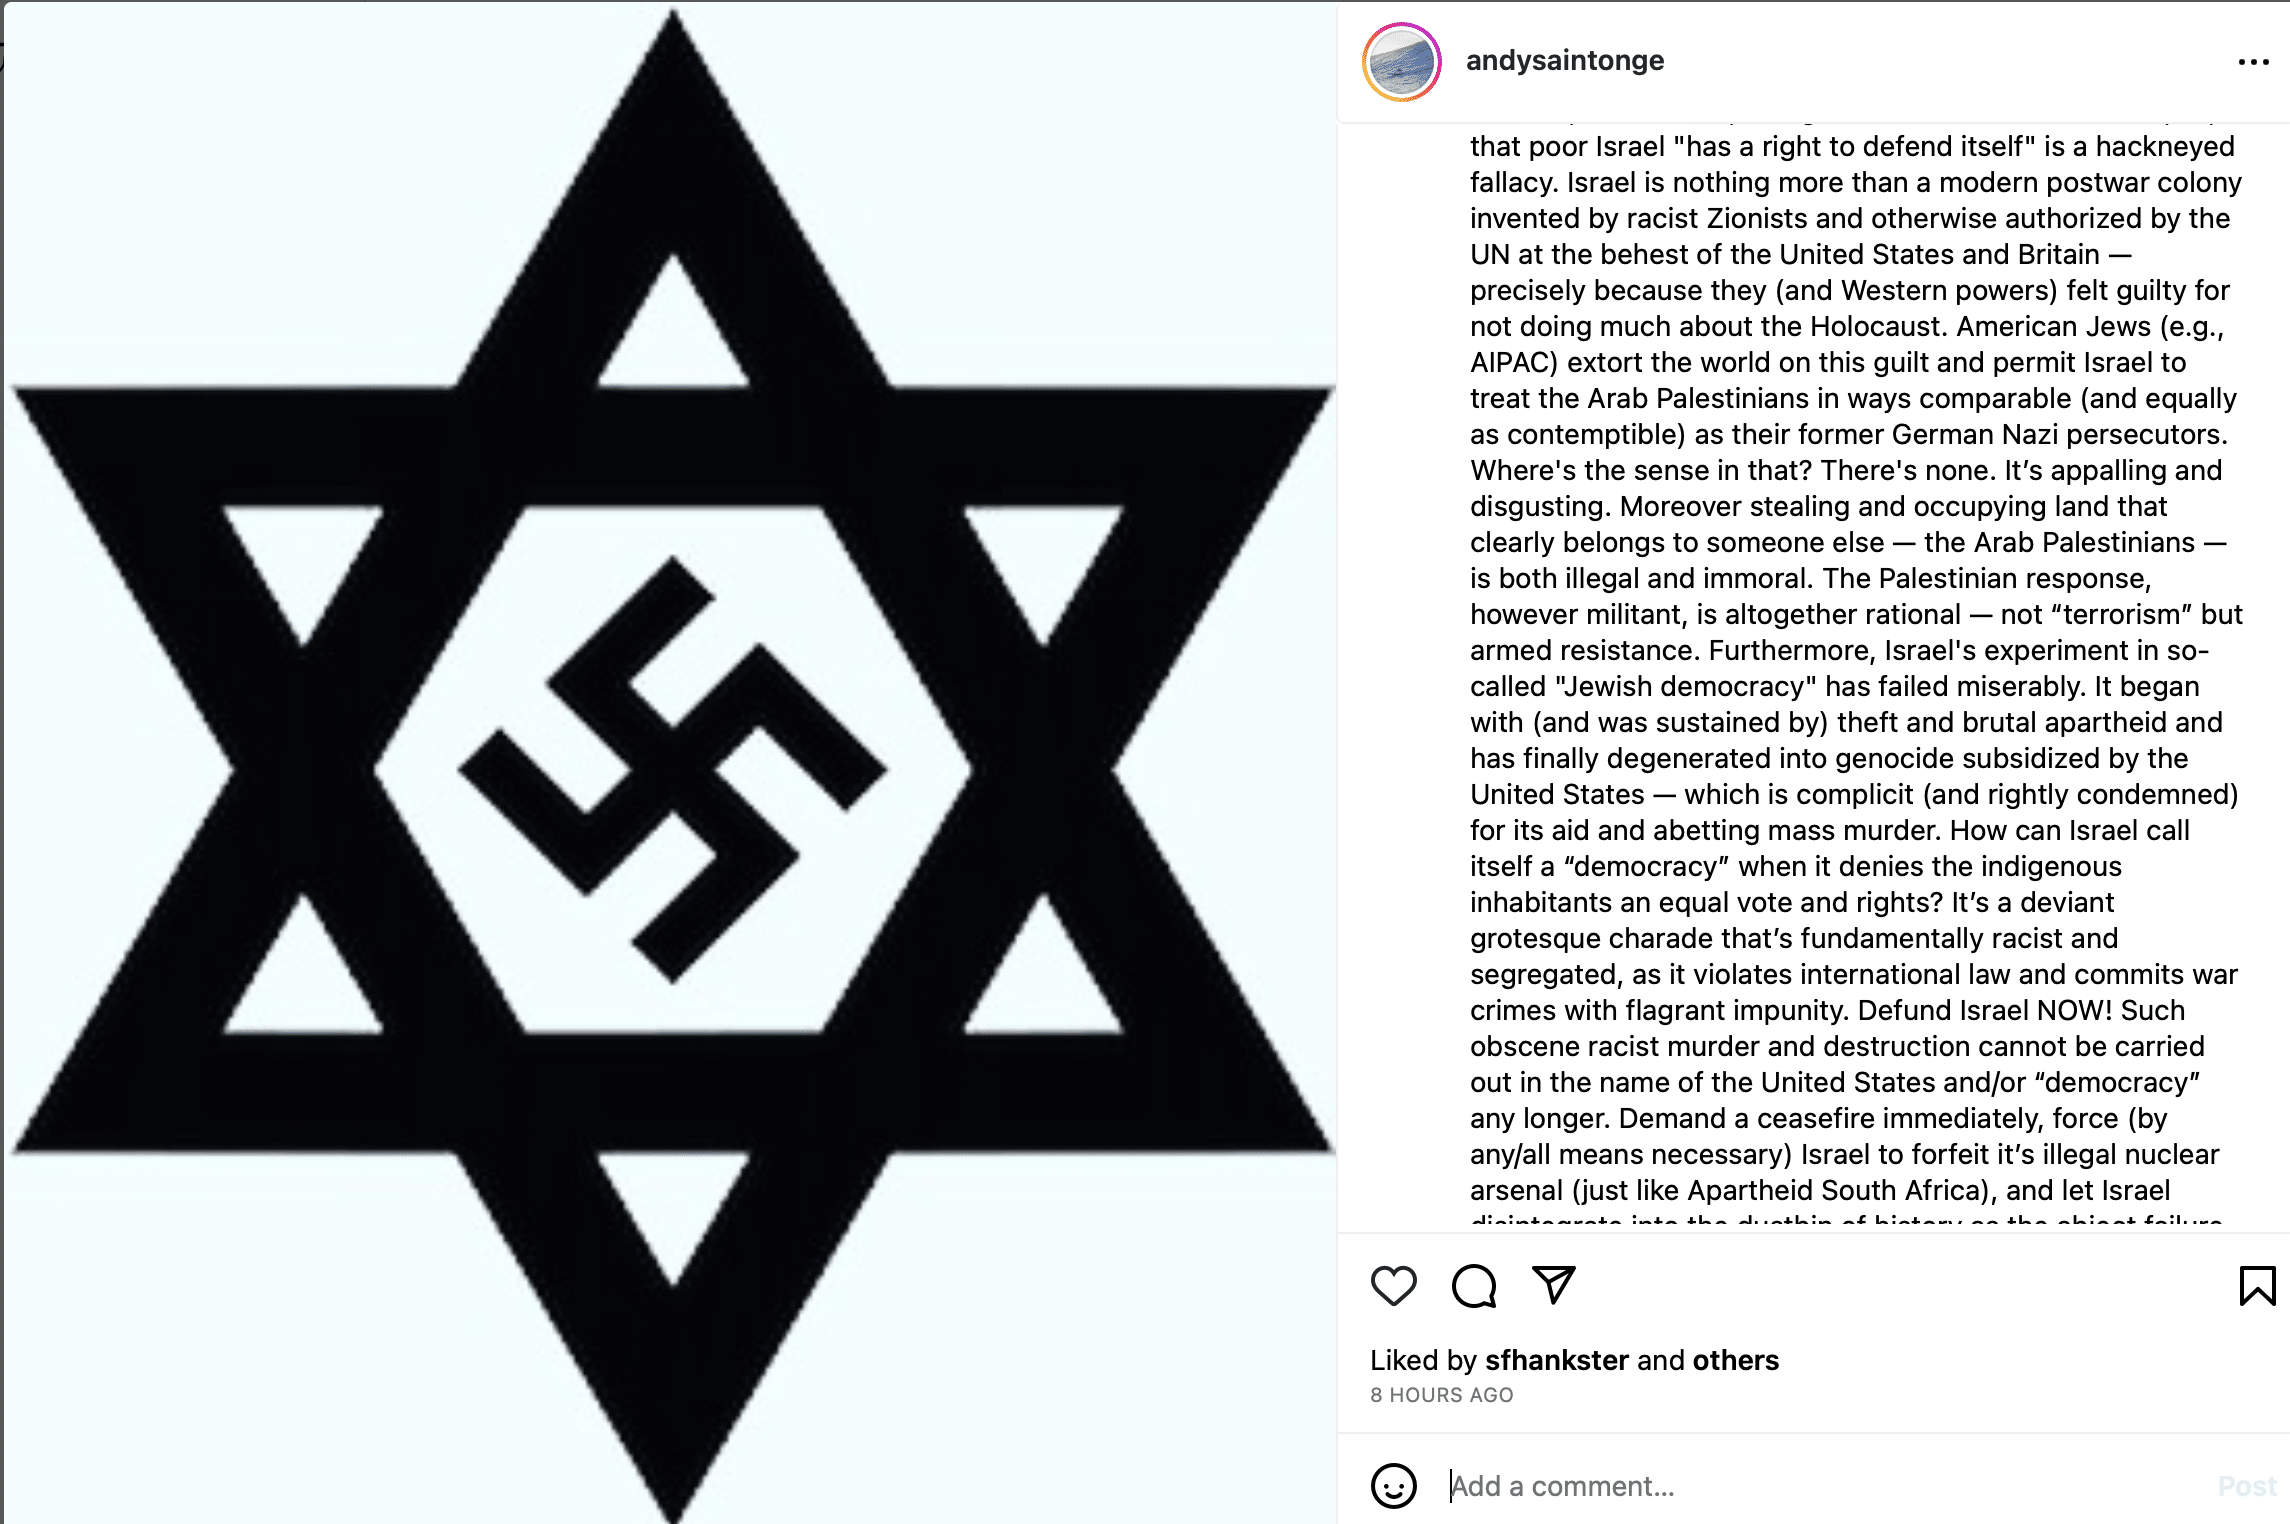 Andy Saint Onge's anti-Israel post on Instagram